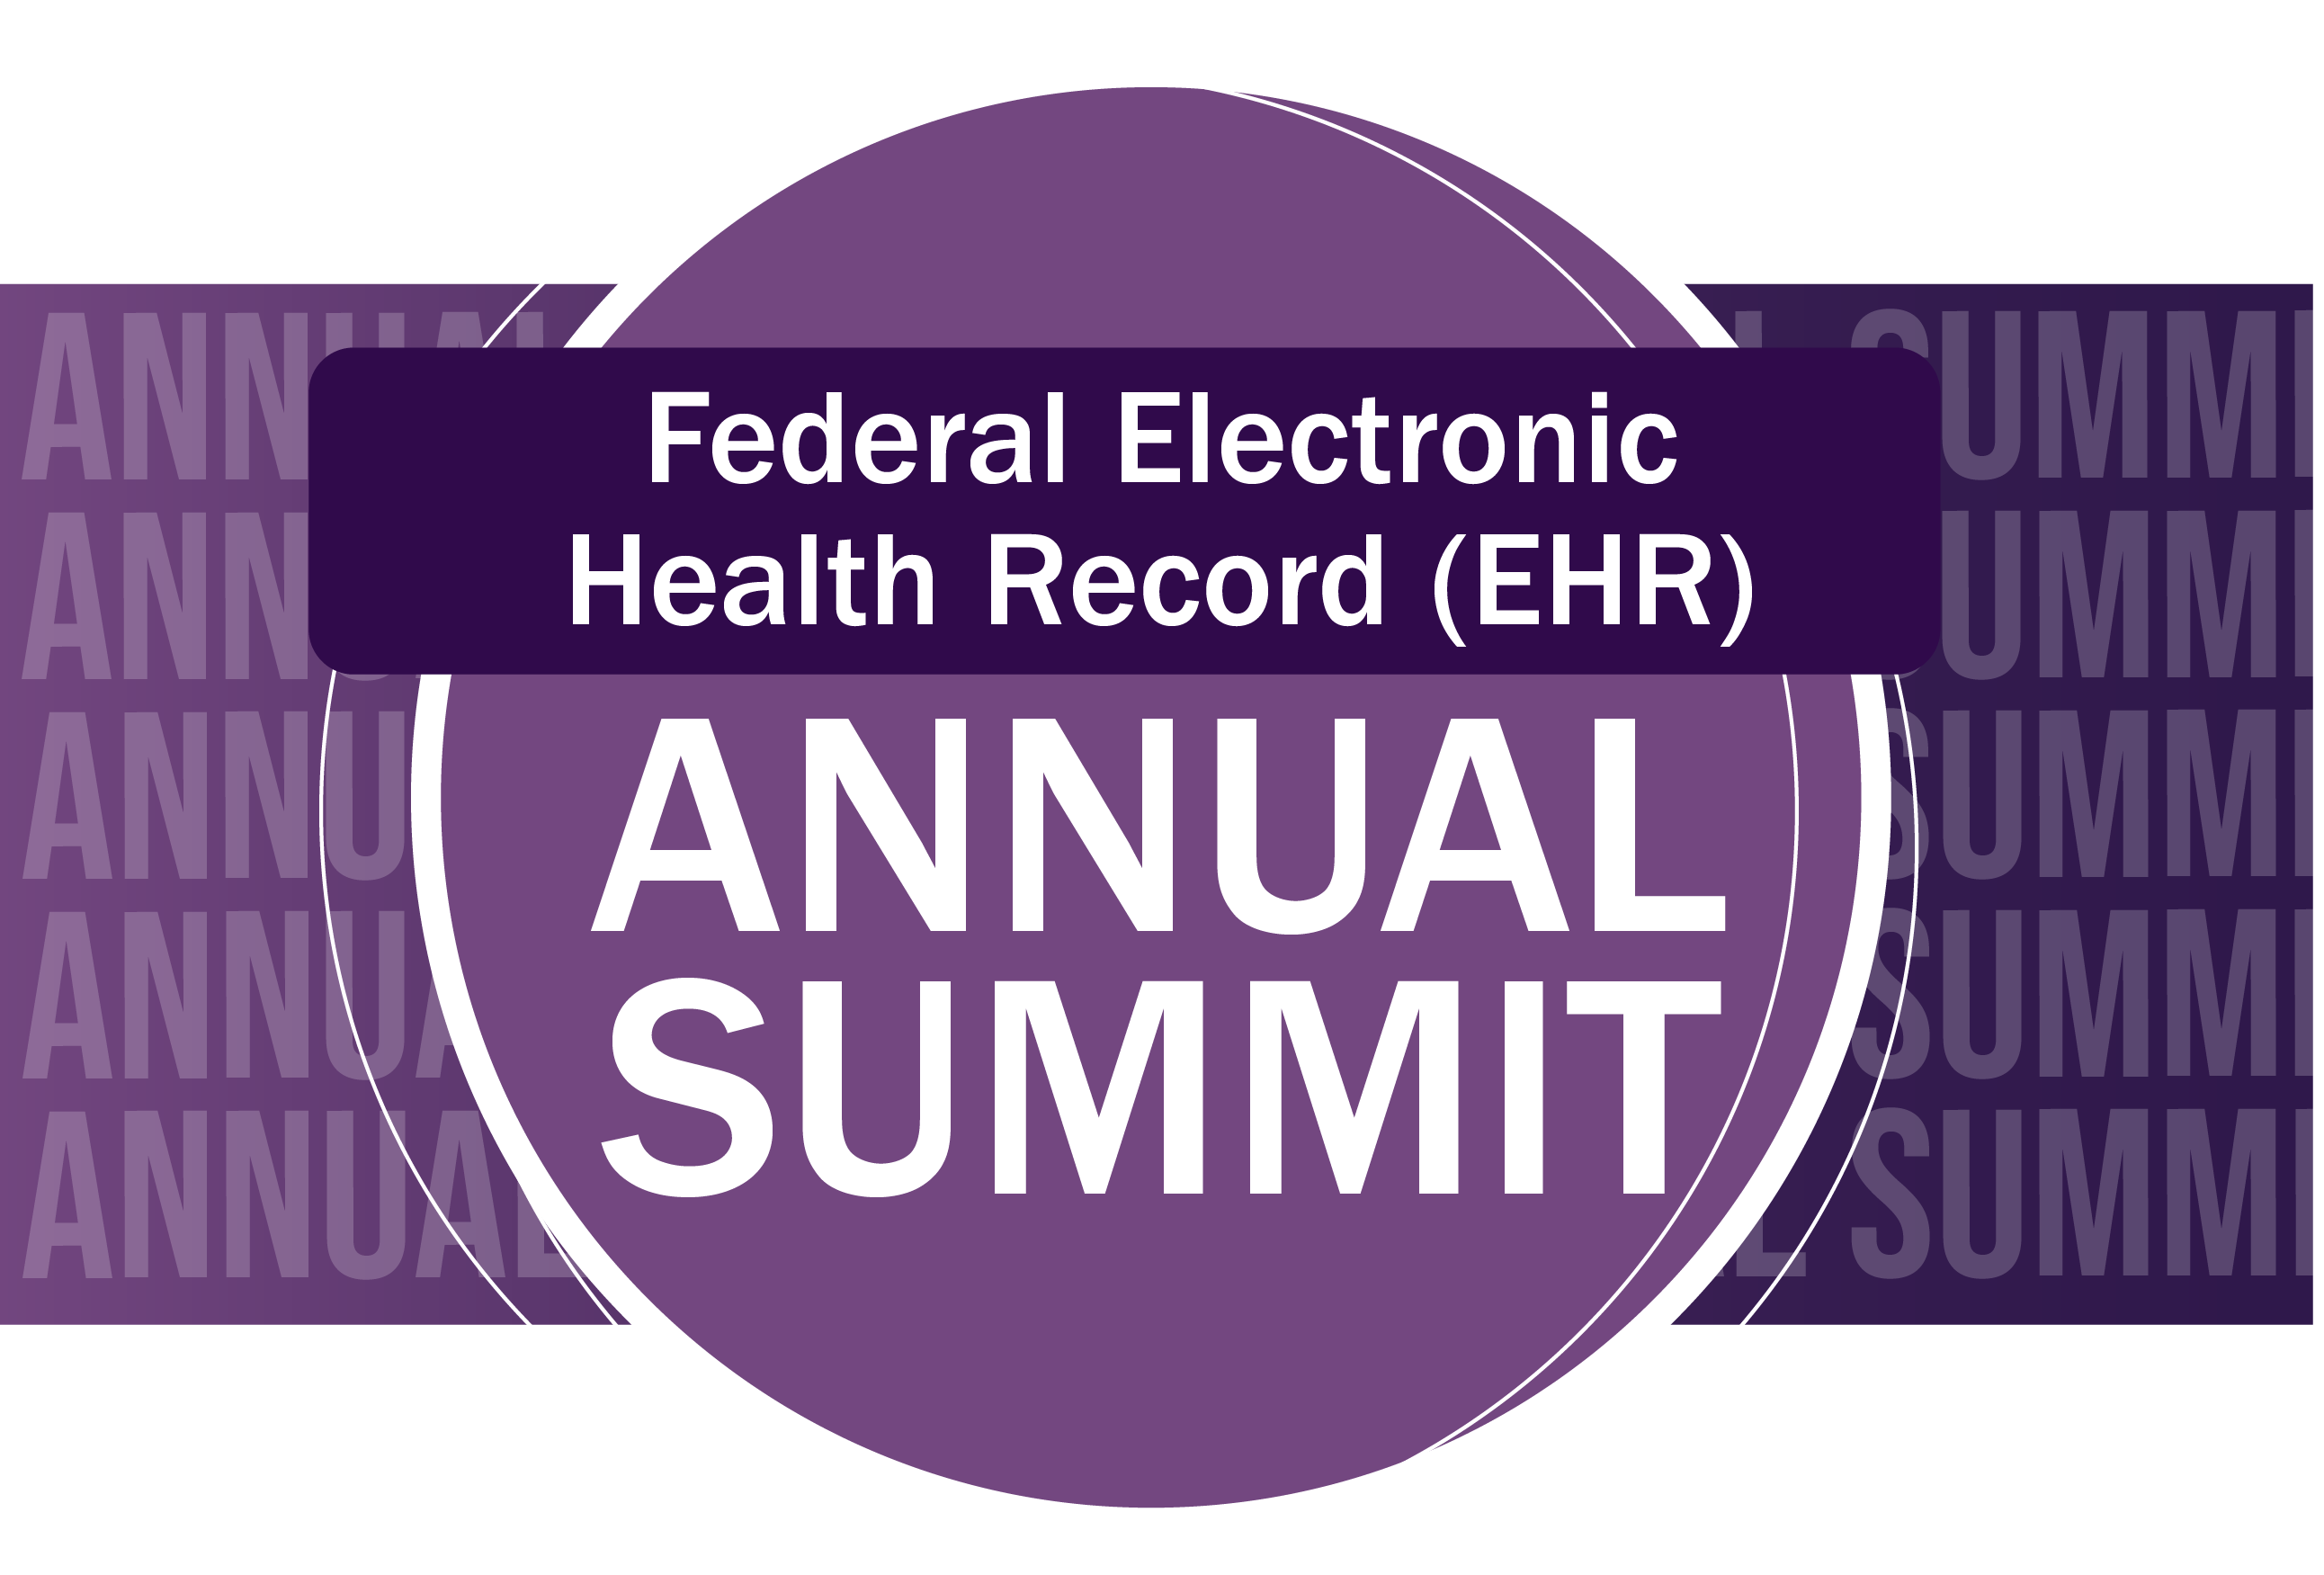 Federal Electronic Health Record (EHR) Annual Summit